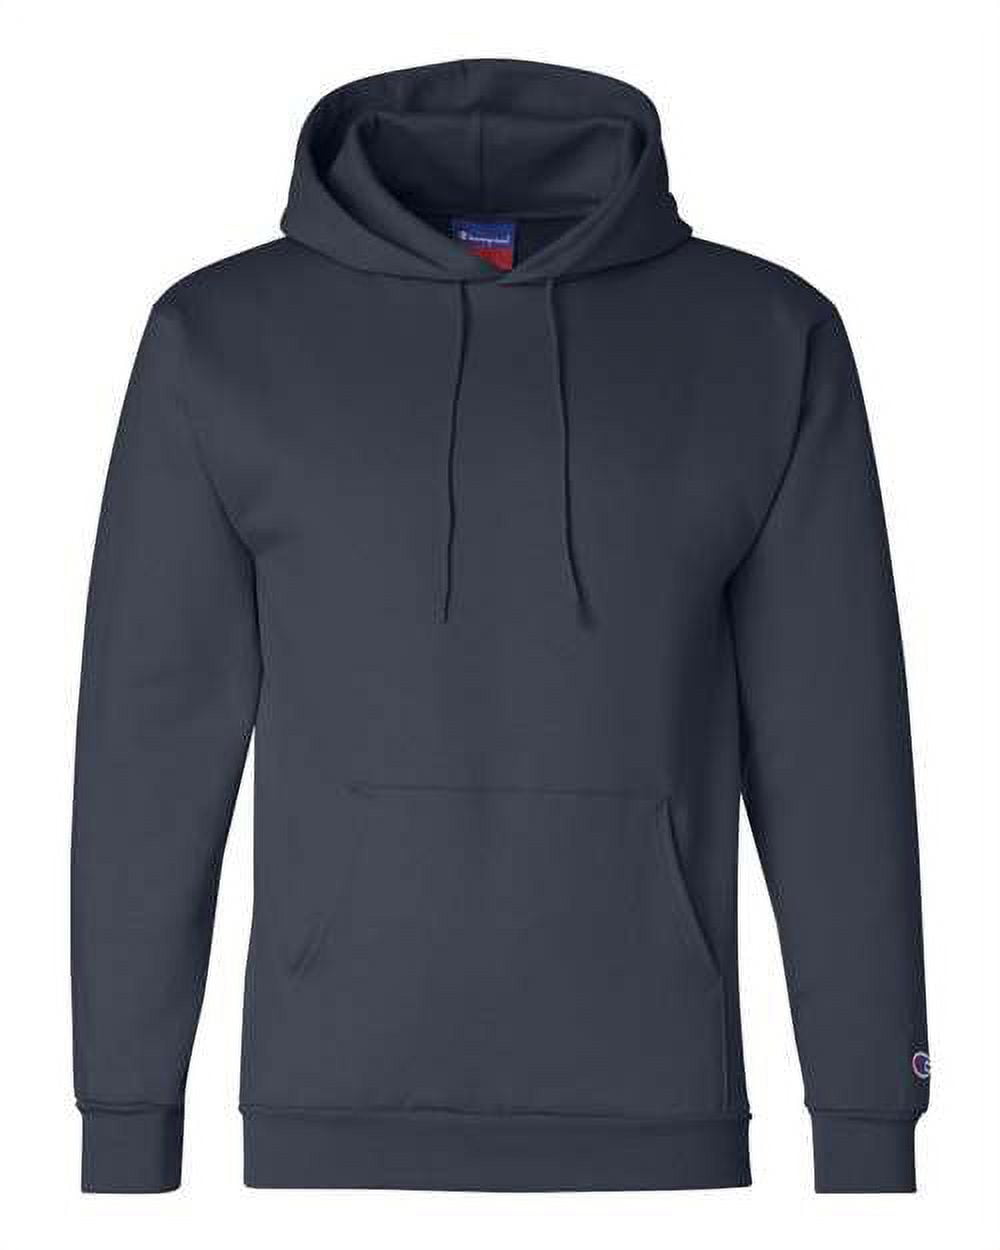 Sweatshirt Pullover Champion Adult Hooded Powerblend S700